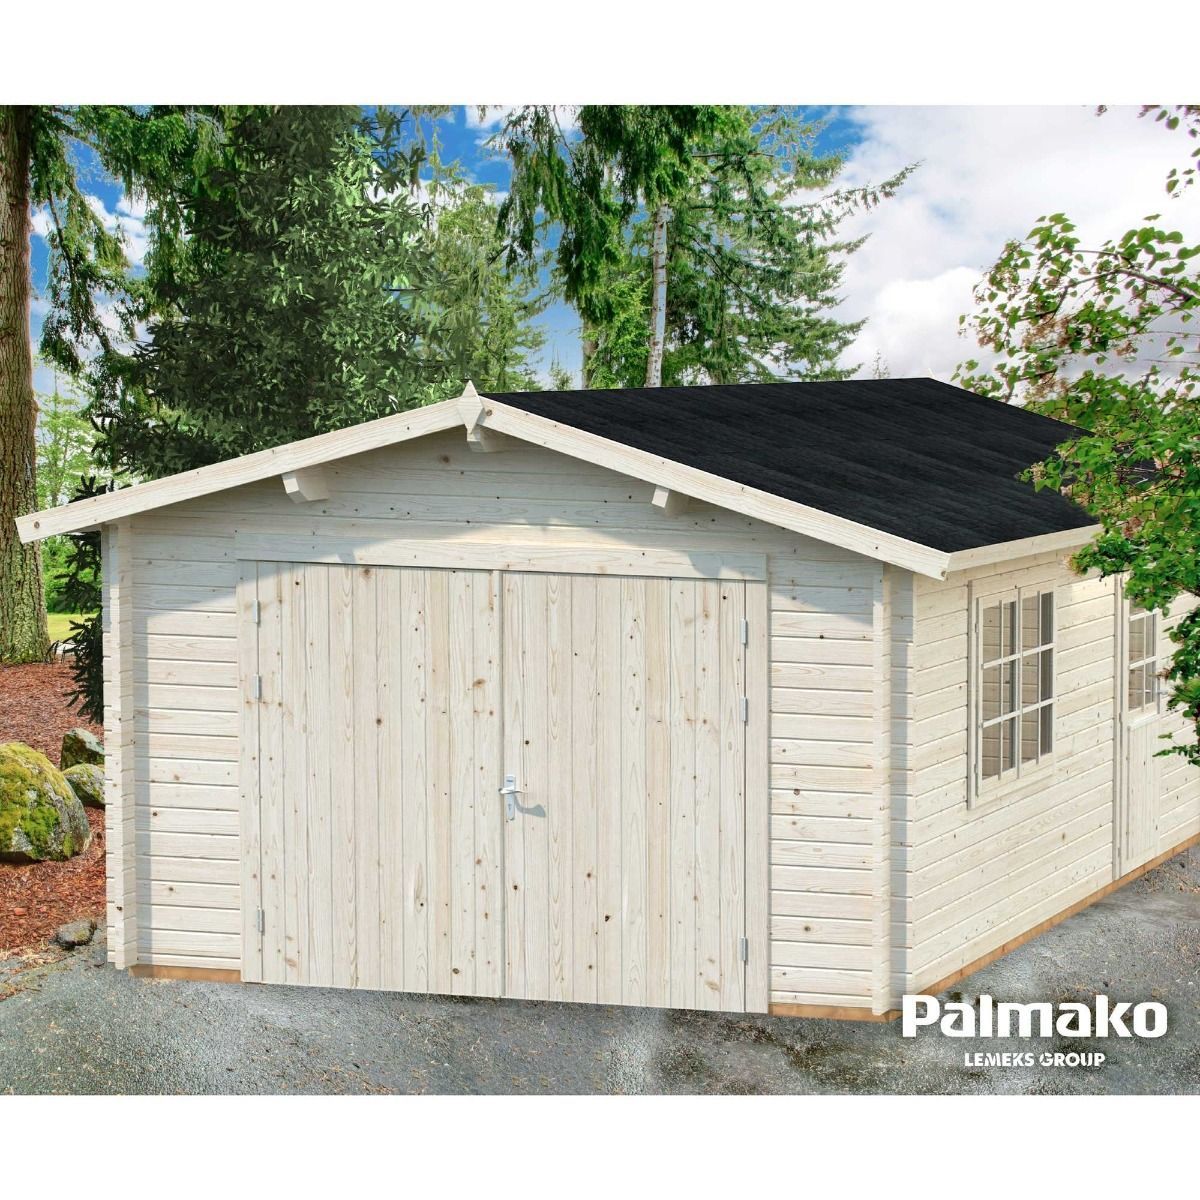 Palmako Roger 19.0m² Garage | Simply Log Cabins | Garagen